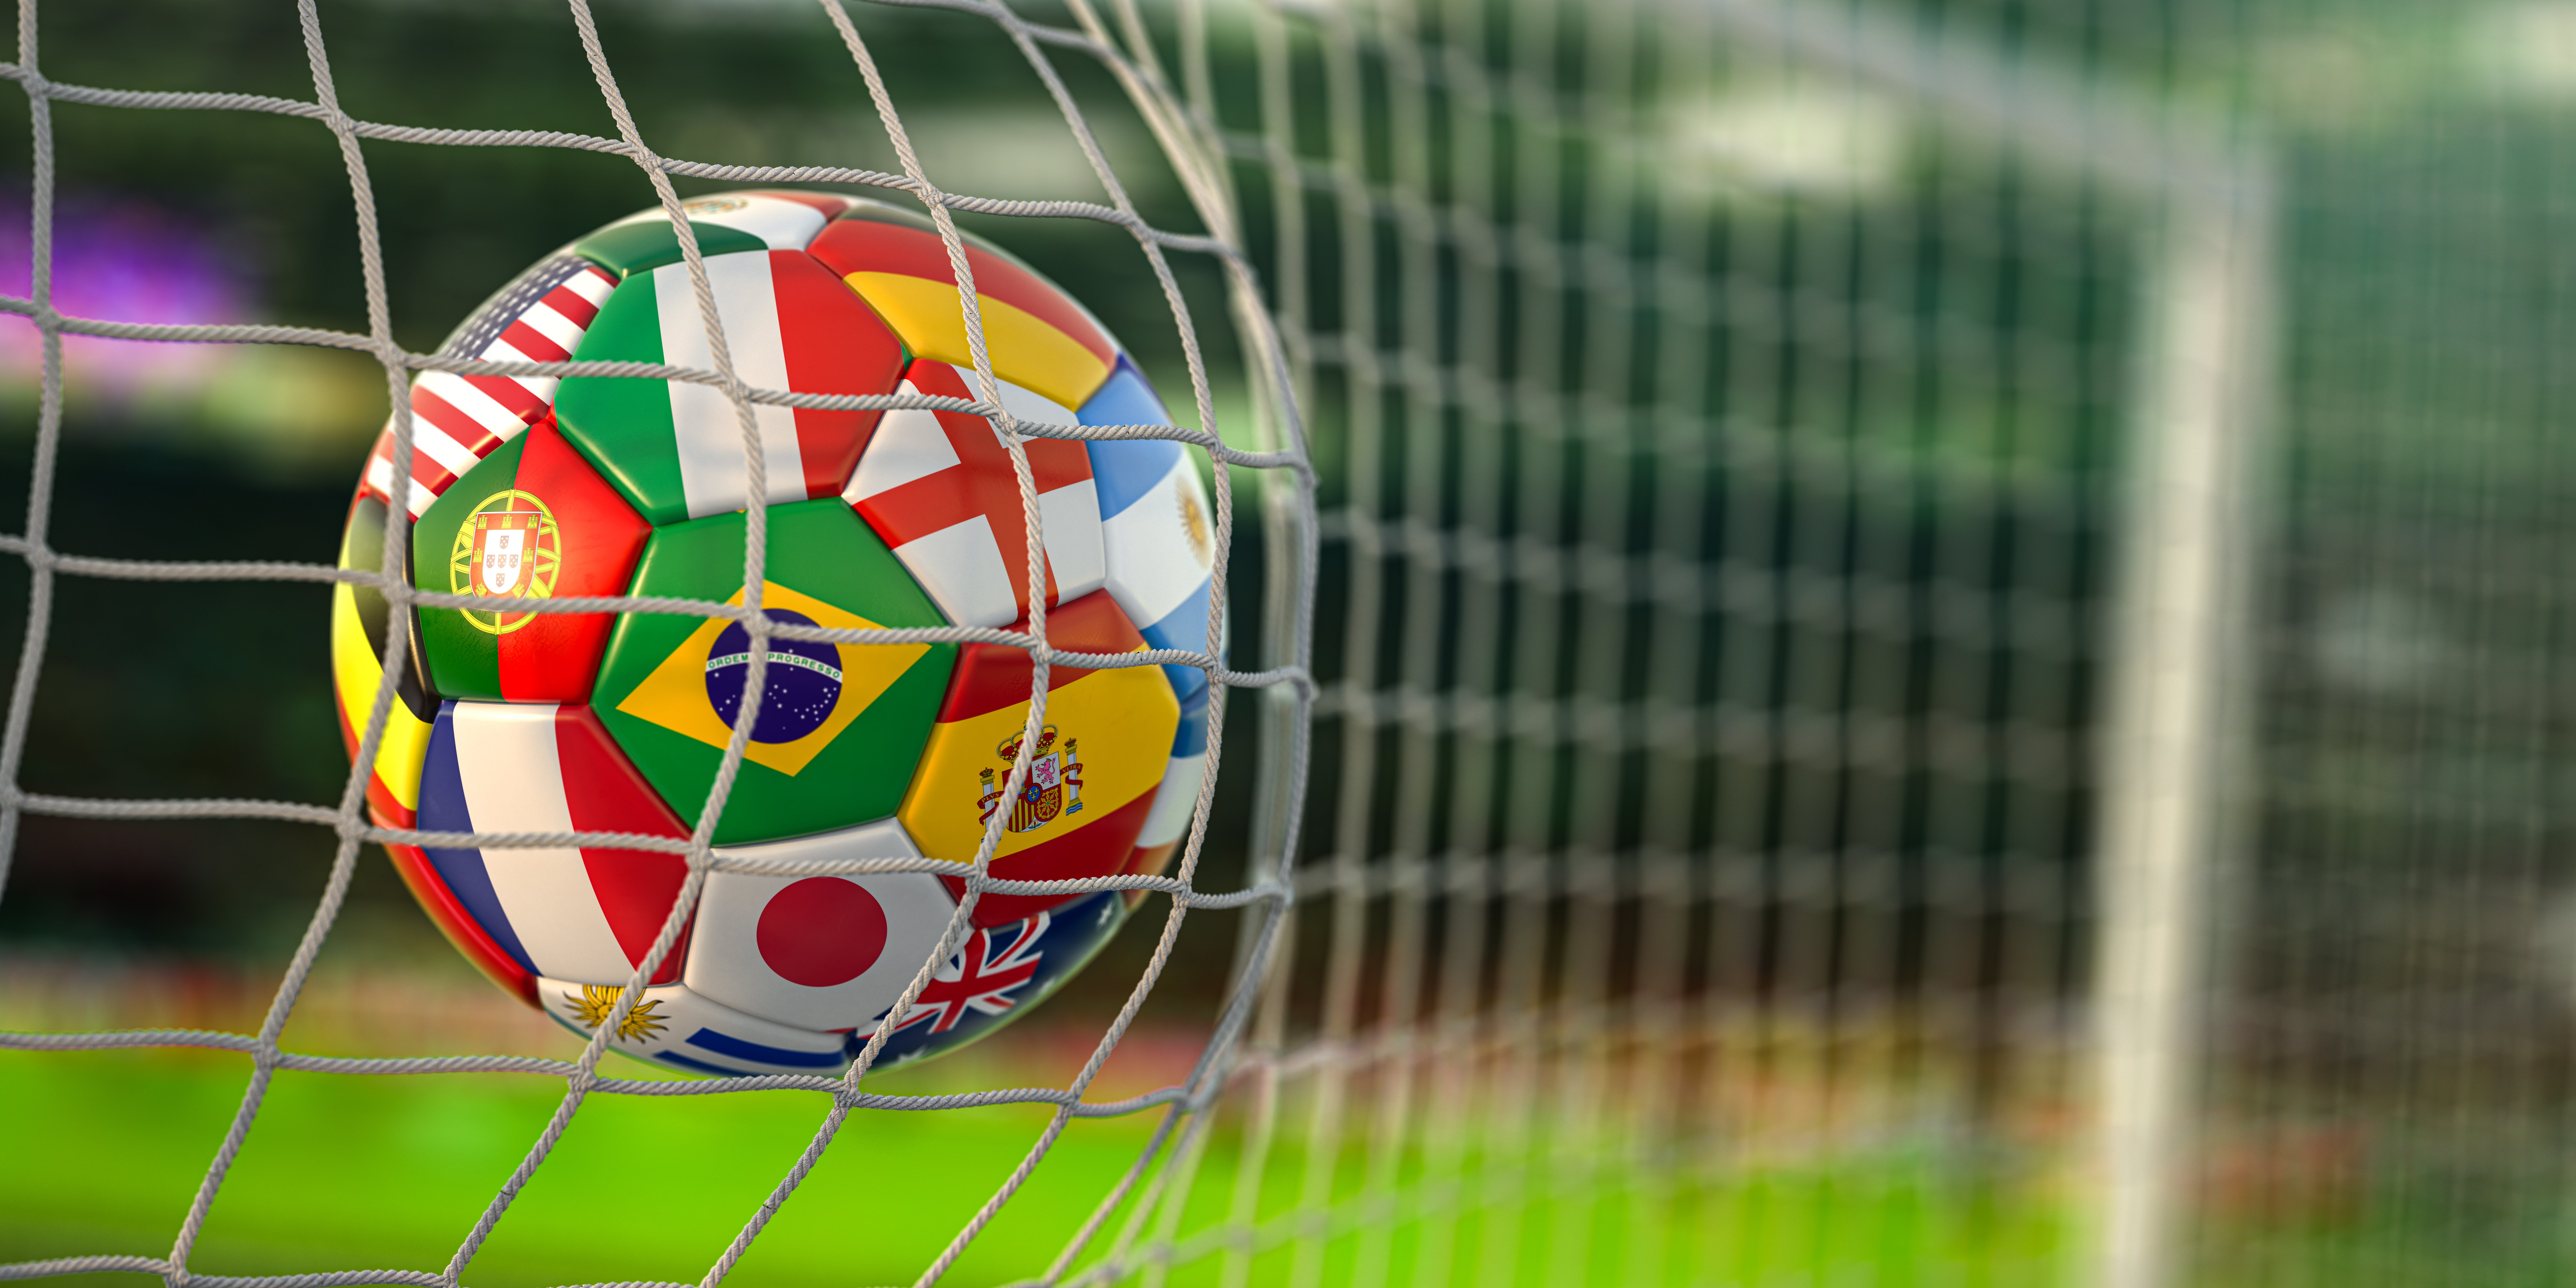 football-ball-with-flags-of-world-countries-2021-09-22-23-50-31-utc